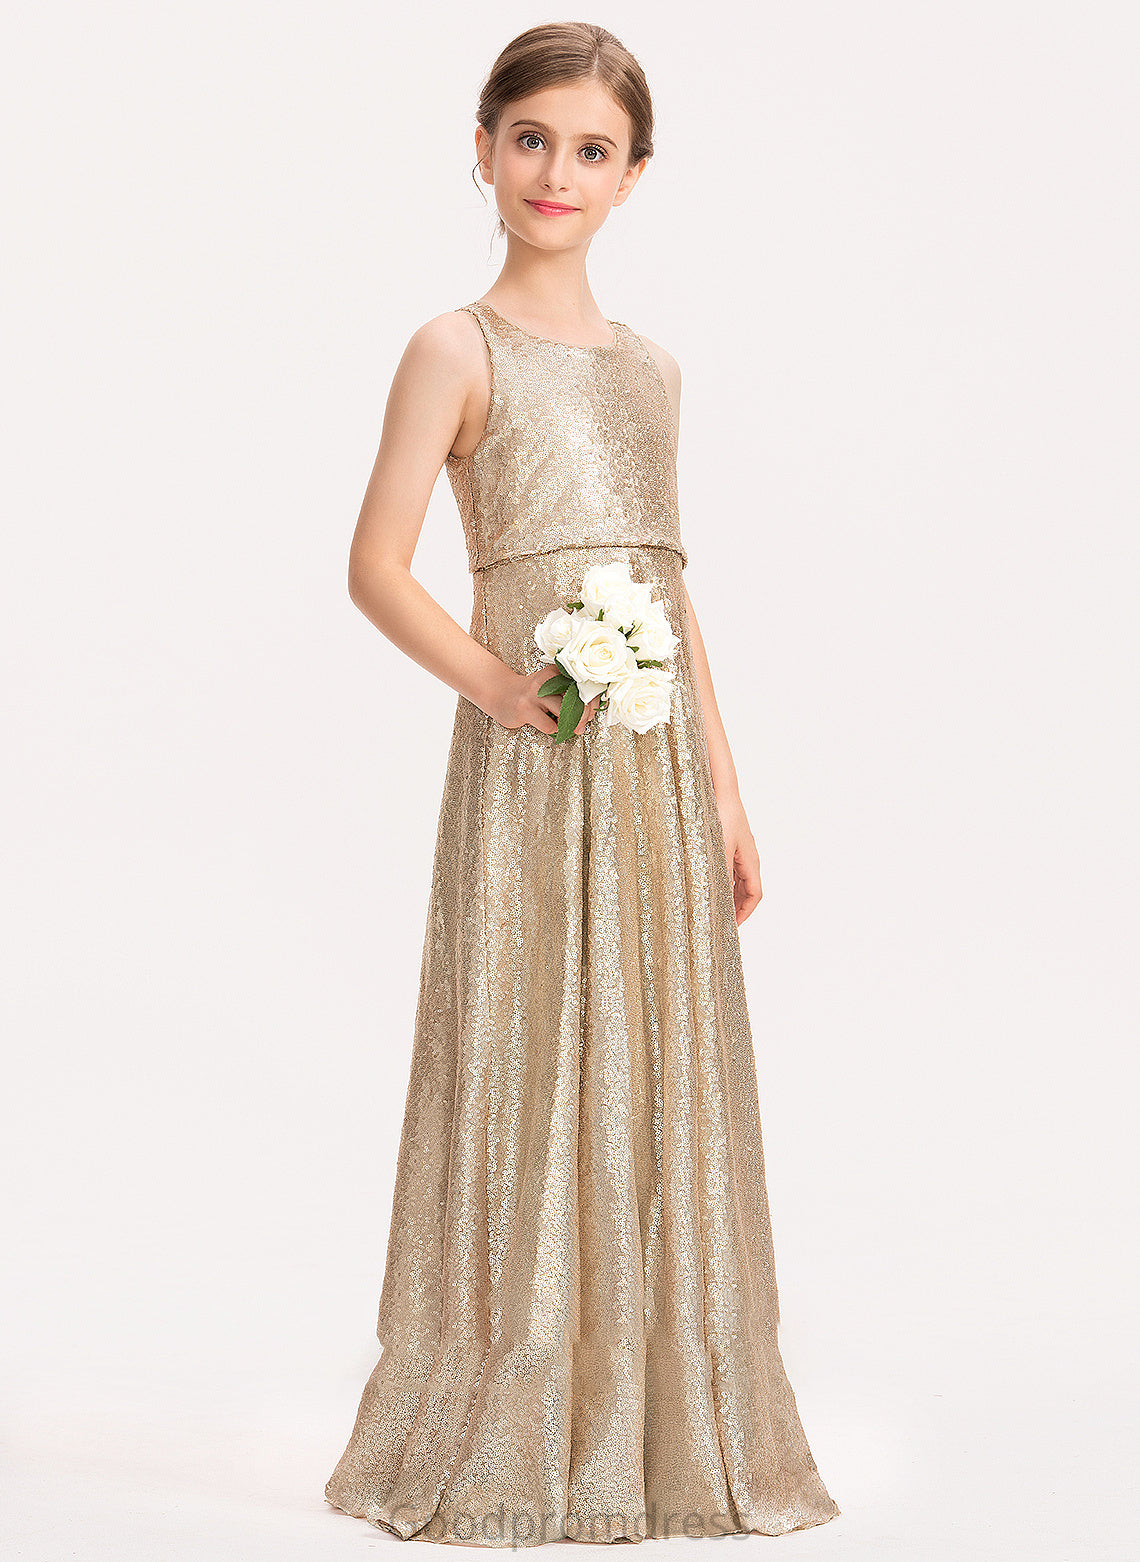 Noelle A-Line Scoop Neck Sequined Floor-Length Junior Bridesmaid Dresses